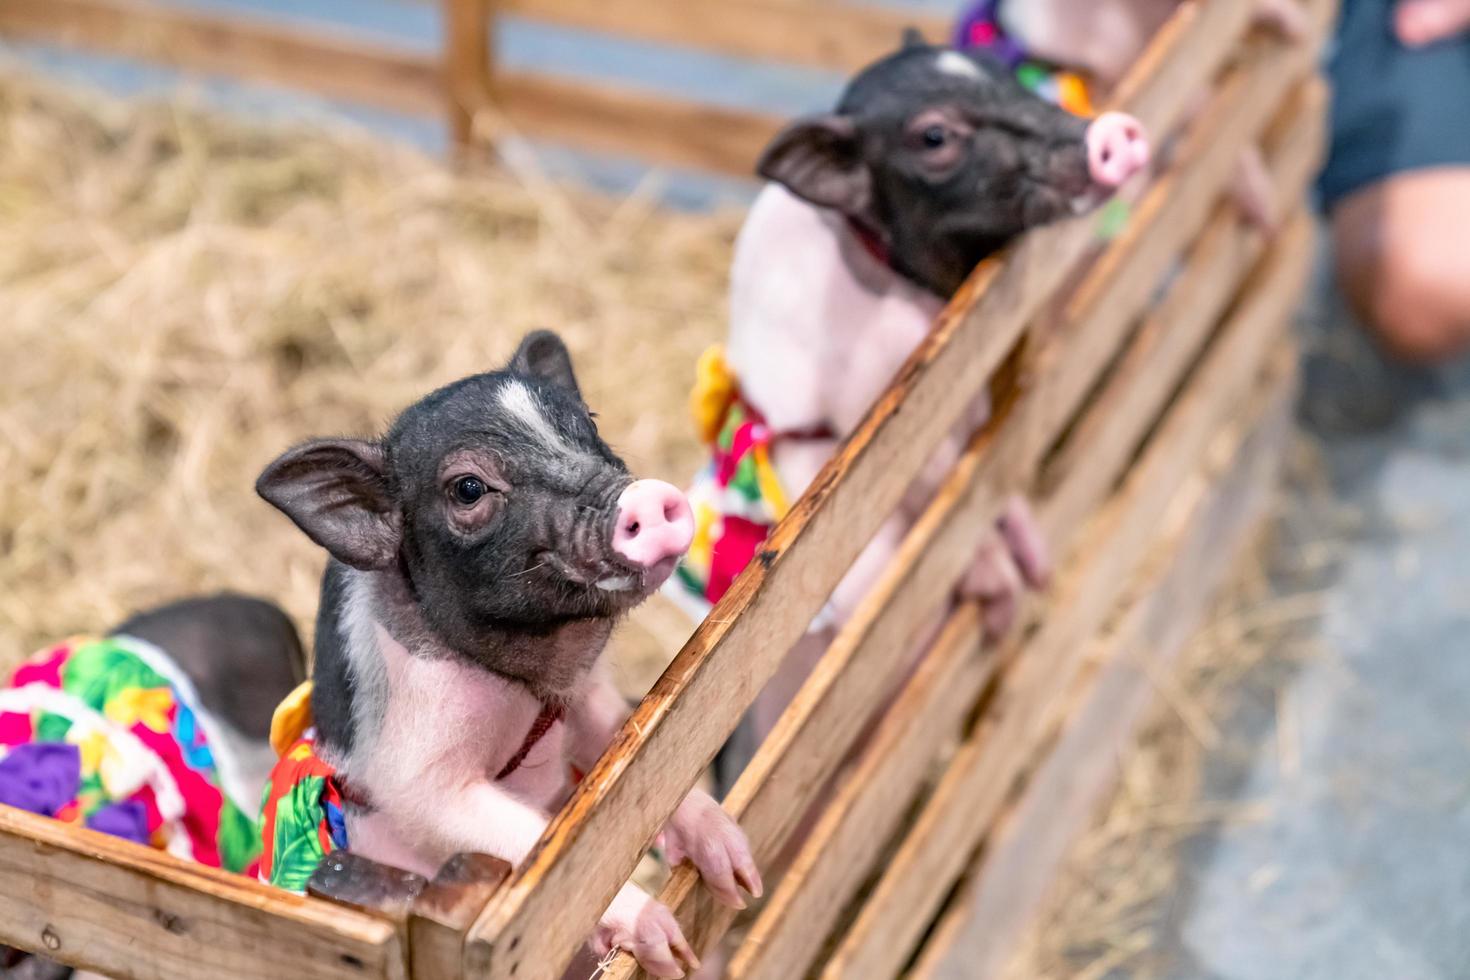 miniature pigs in the farm photo